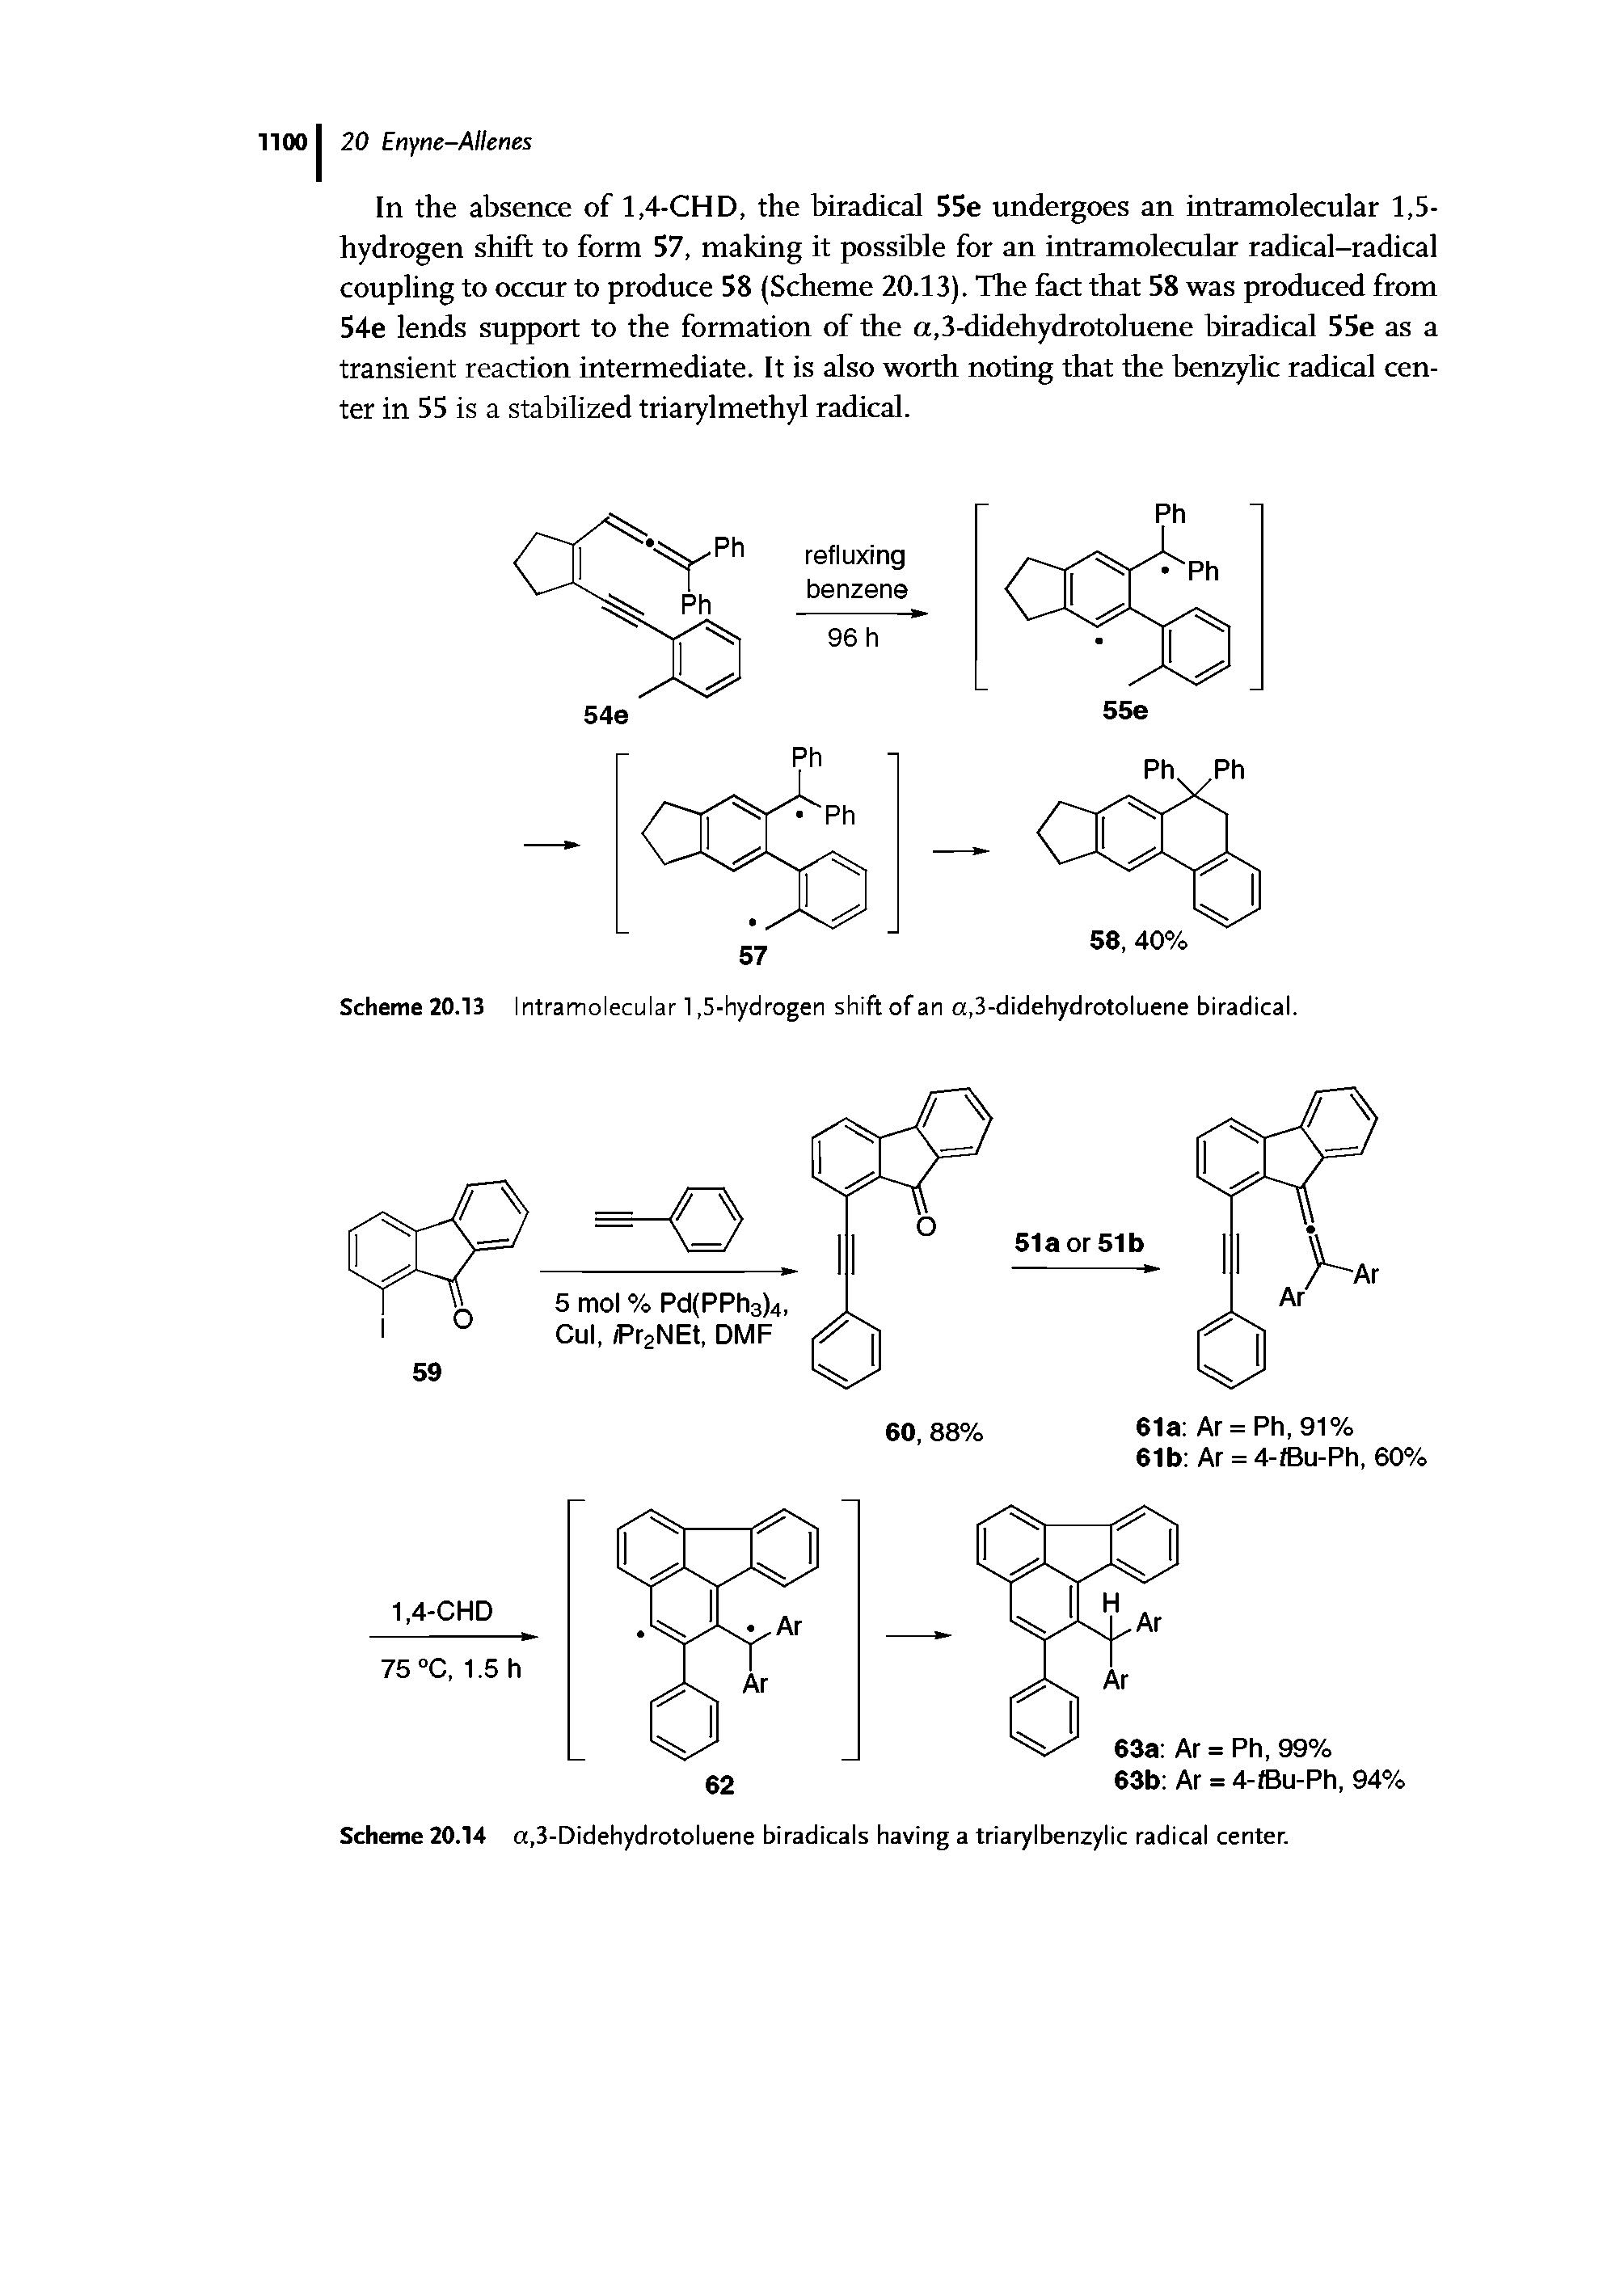 Scheme 20.13 Intramolecular 1,5-hydrogen shift of an a,3-didehydrotoluene biradical.